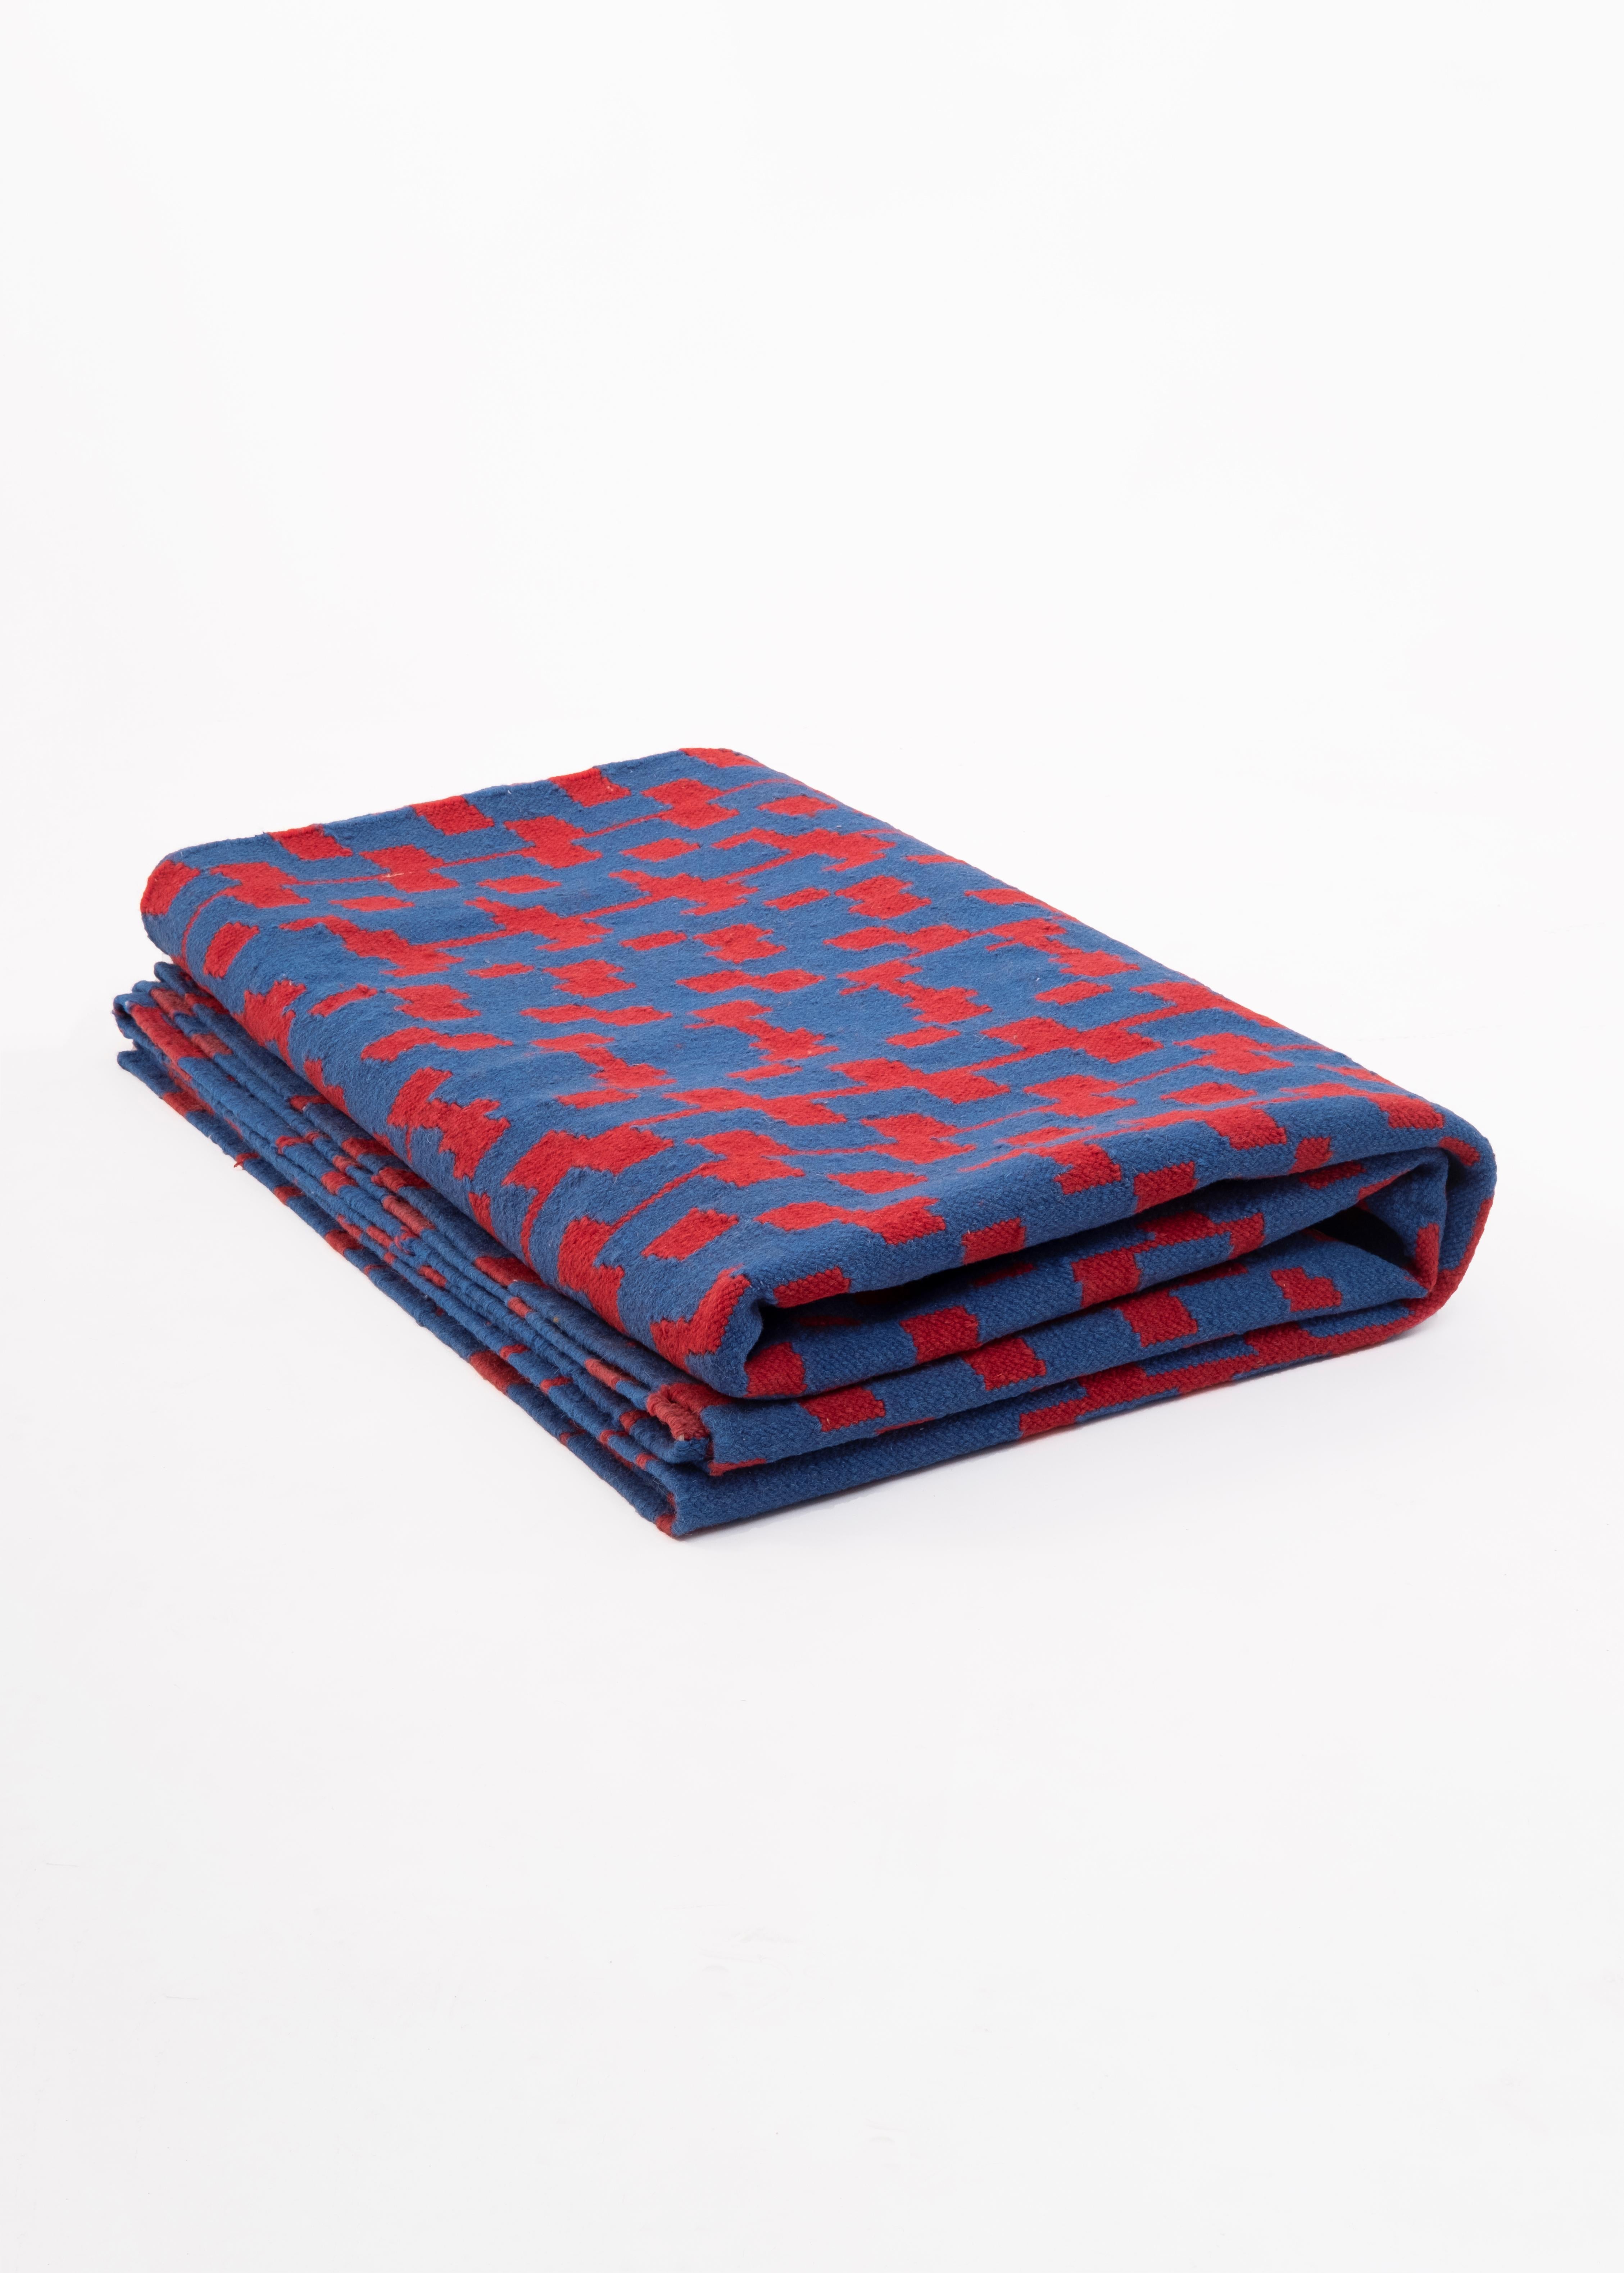 Contemporary Fuoritempo - Red Blue - Design Kilim Rug Paolo Giordano Wool Carpet Cotton For Sale